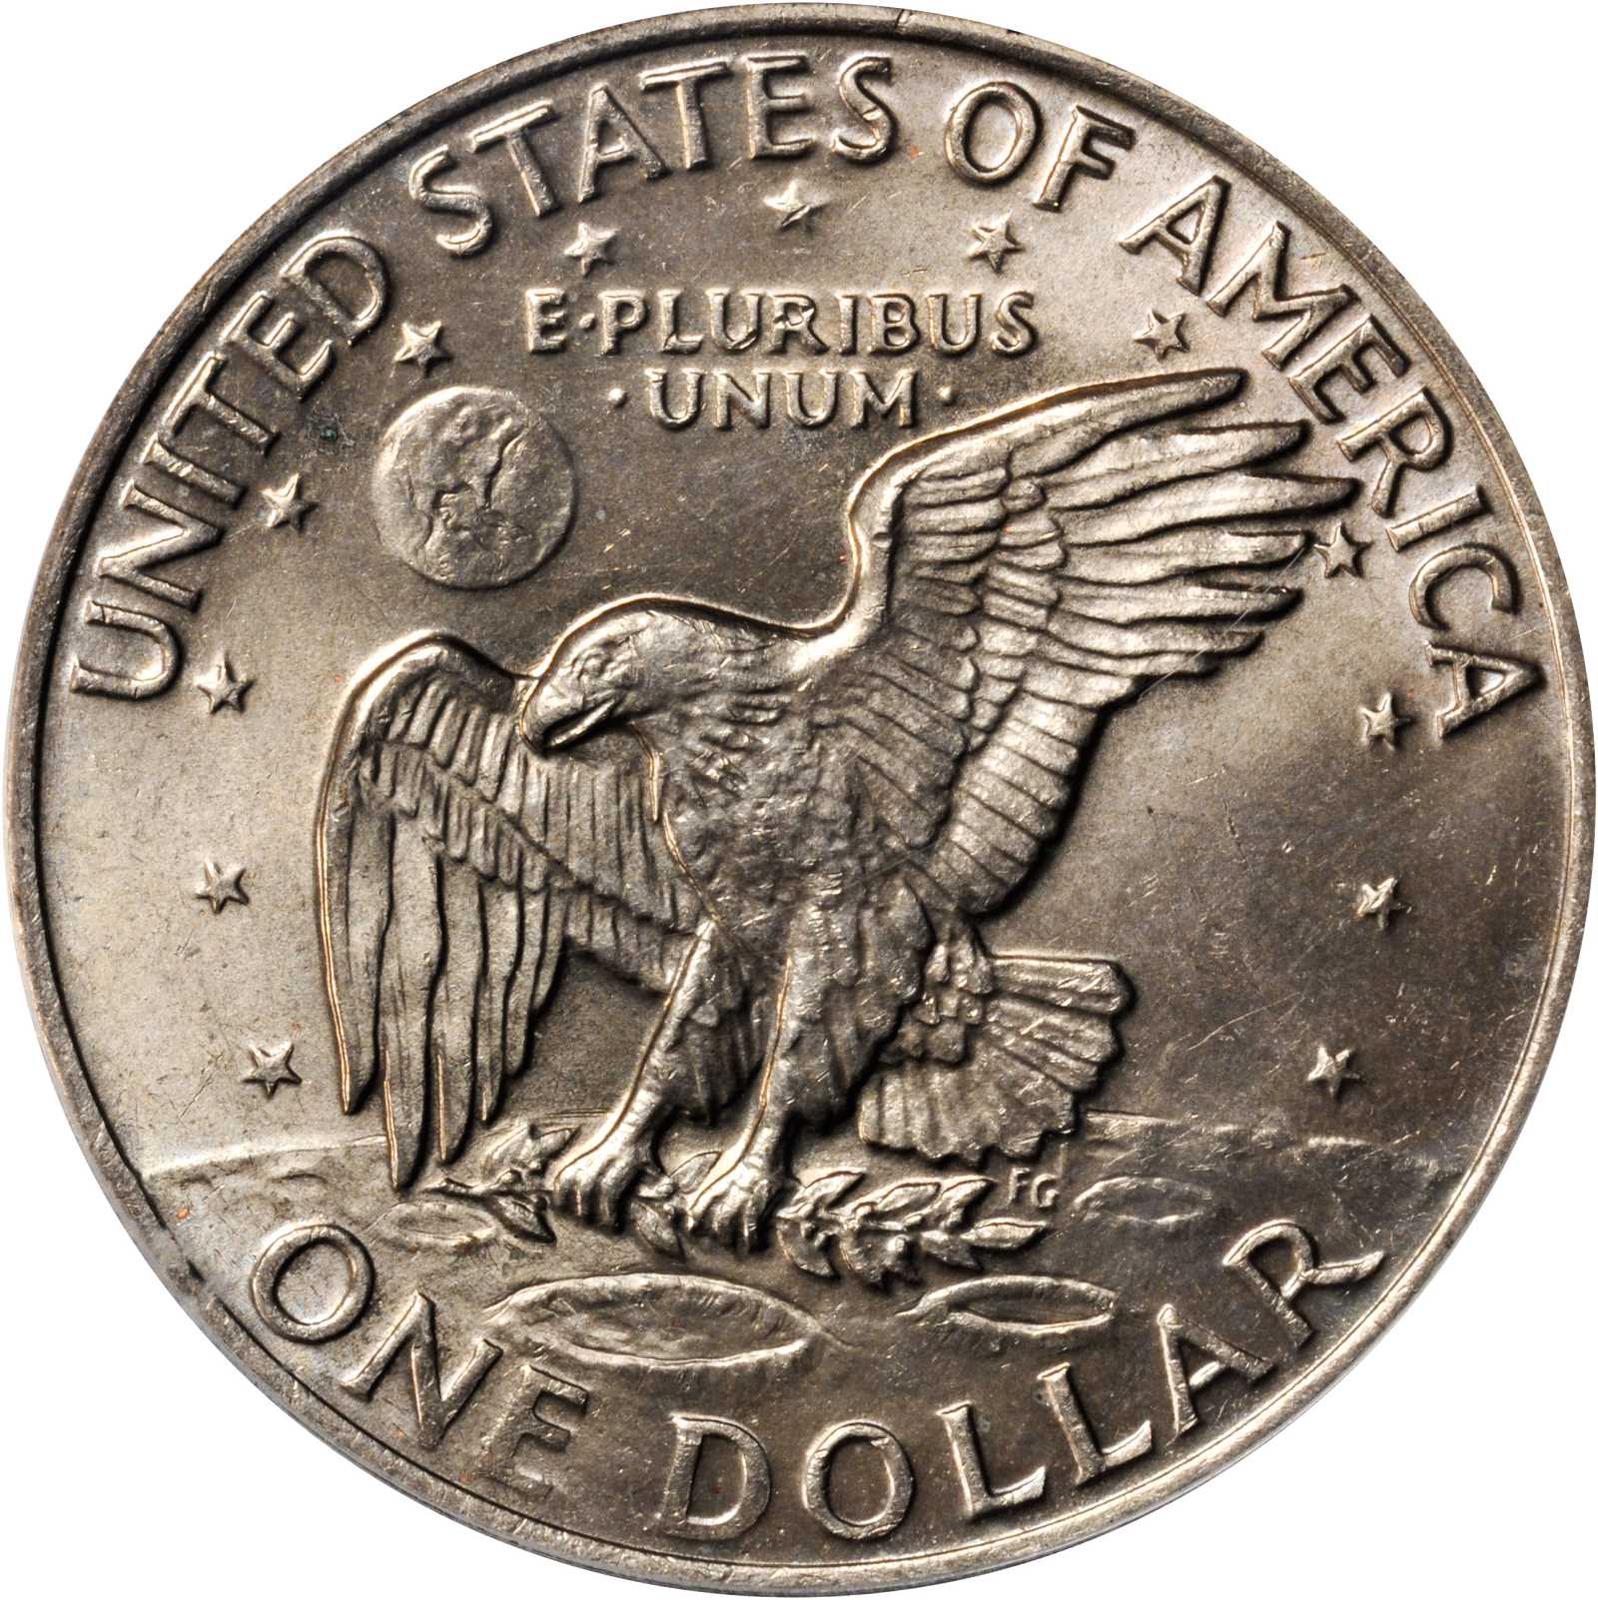 1972 half dollar coin value chart